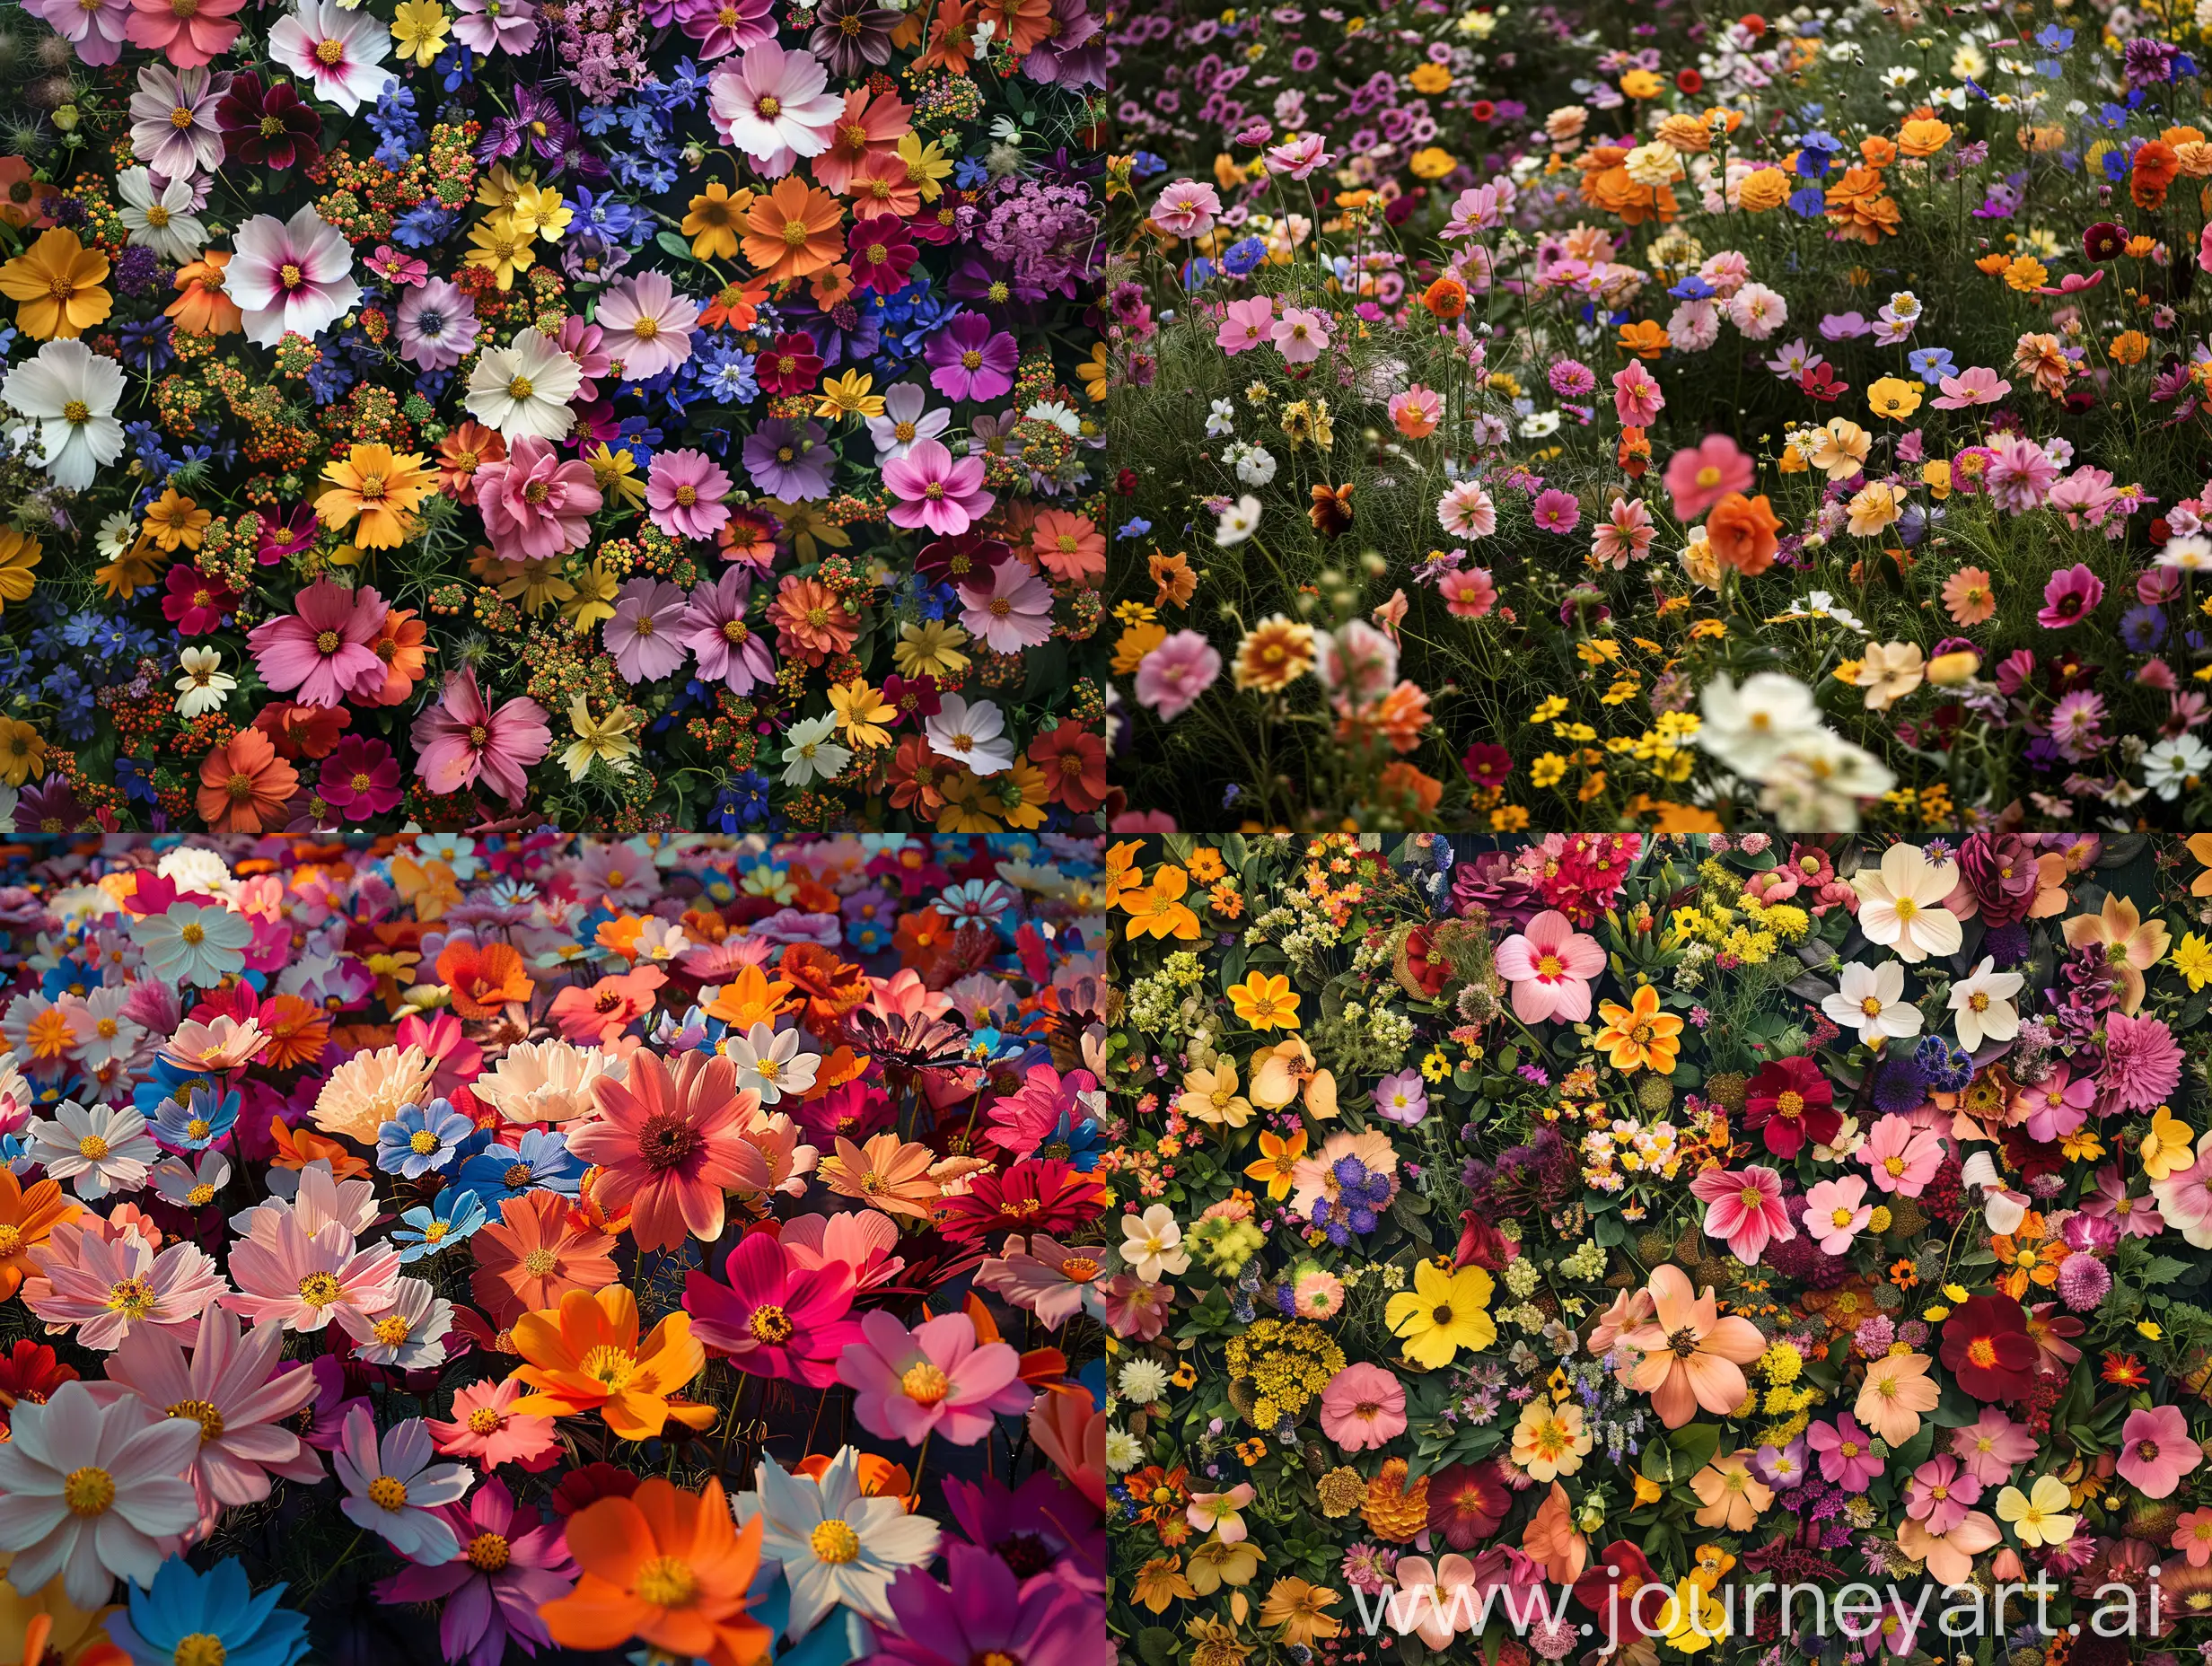 Vibrant-Sea-of-Flowers-Blanketing-the-Landscape